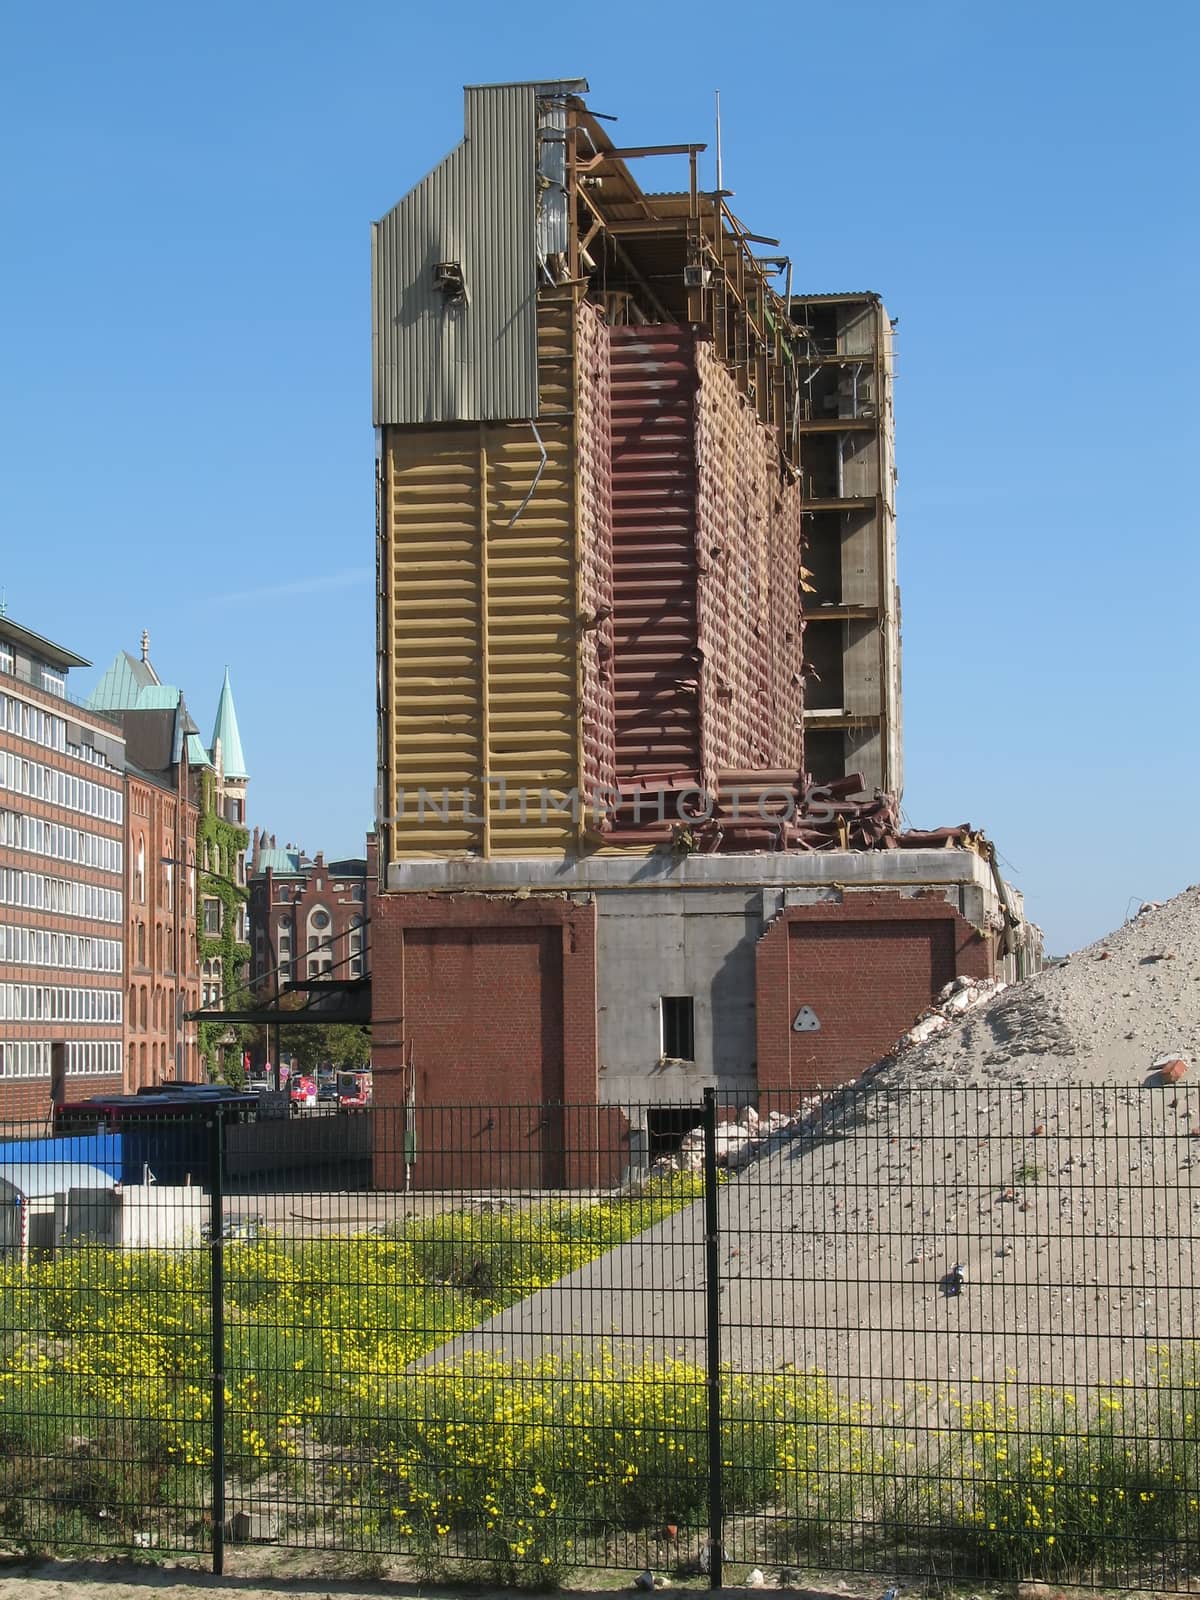 Demolition of the coffee warehouse by SchneiderStockImages